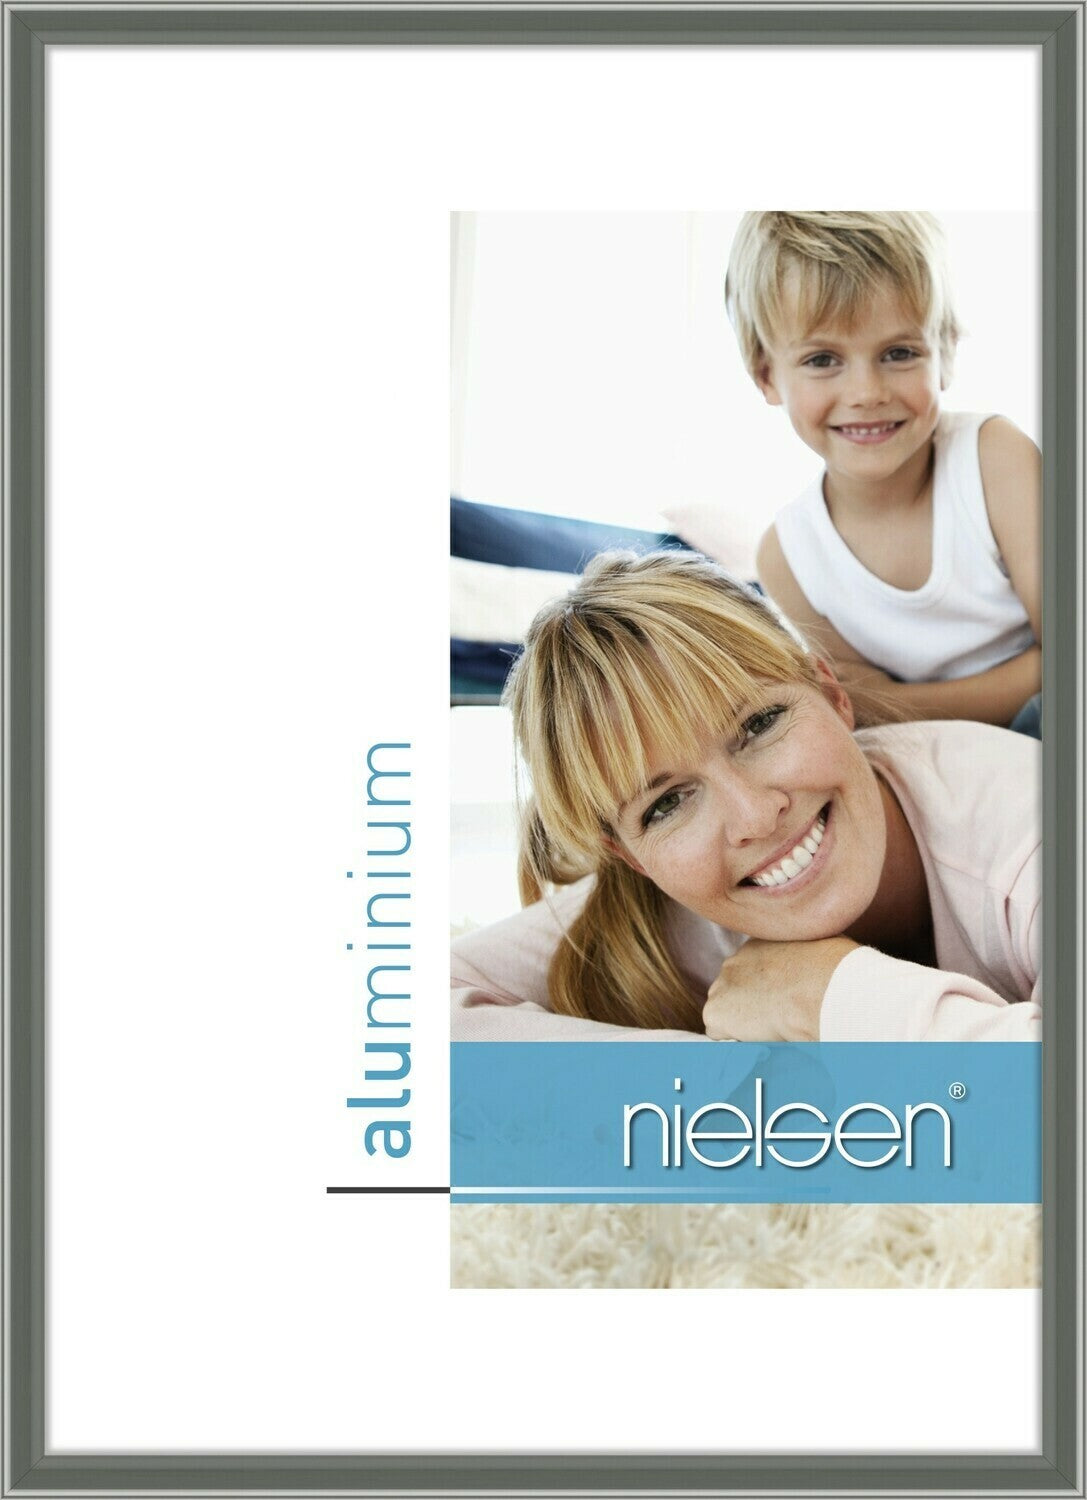 30 x 40cm | Classic Nielsen Frames